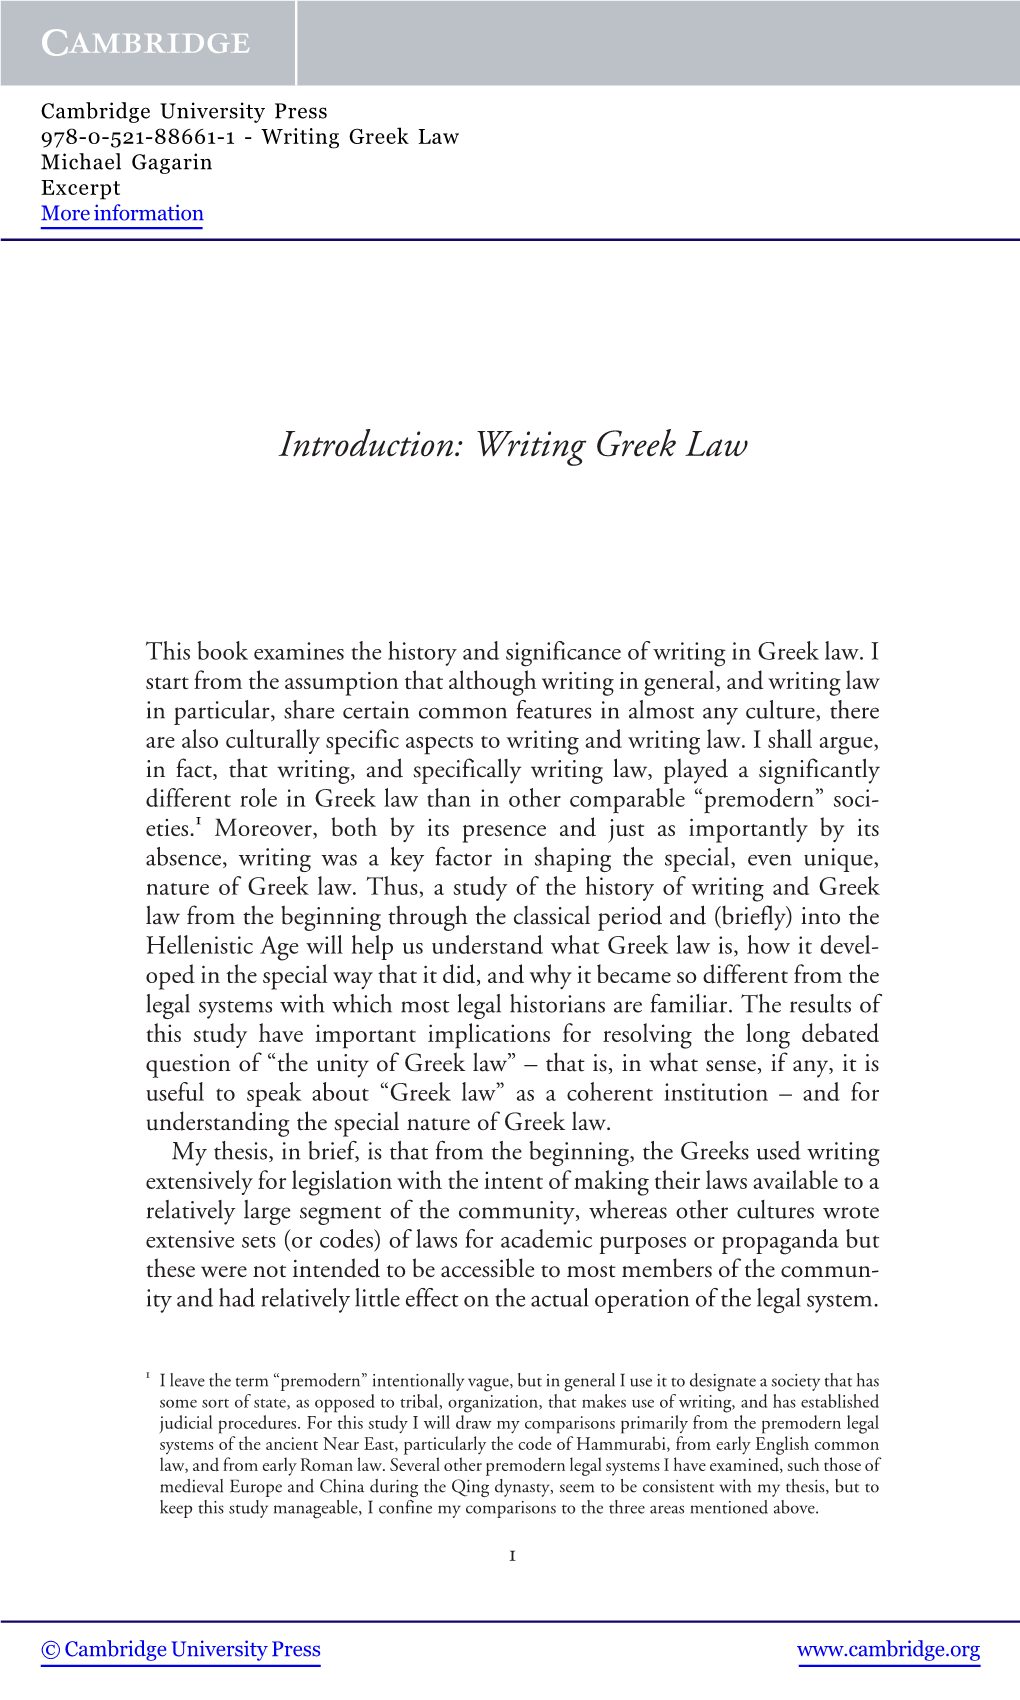 Introduction: Writing Greek Law